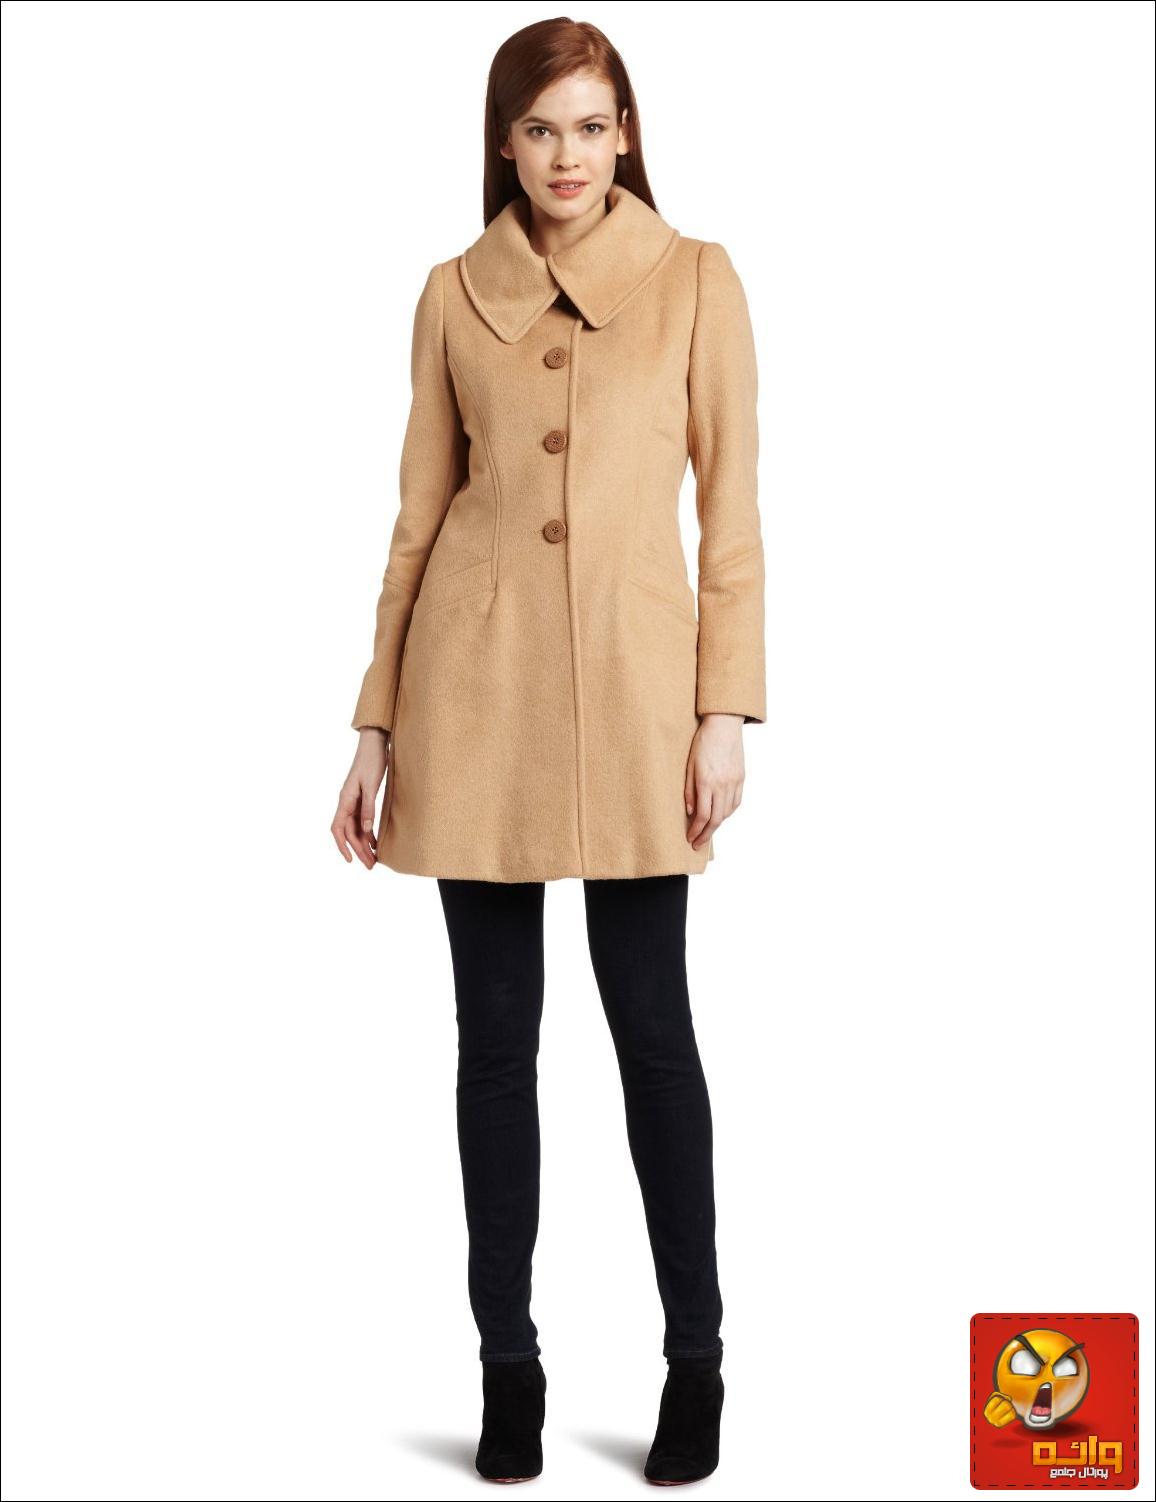 https://rozup.ir/up/wae/Pictures/Coat/WinterCoat1/Winter-Coats-For-Women-Fashion.jpg